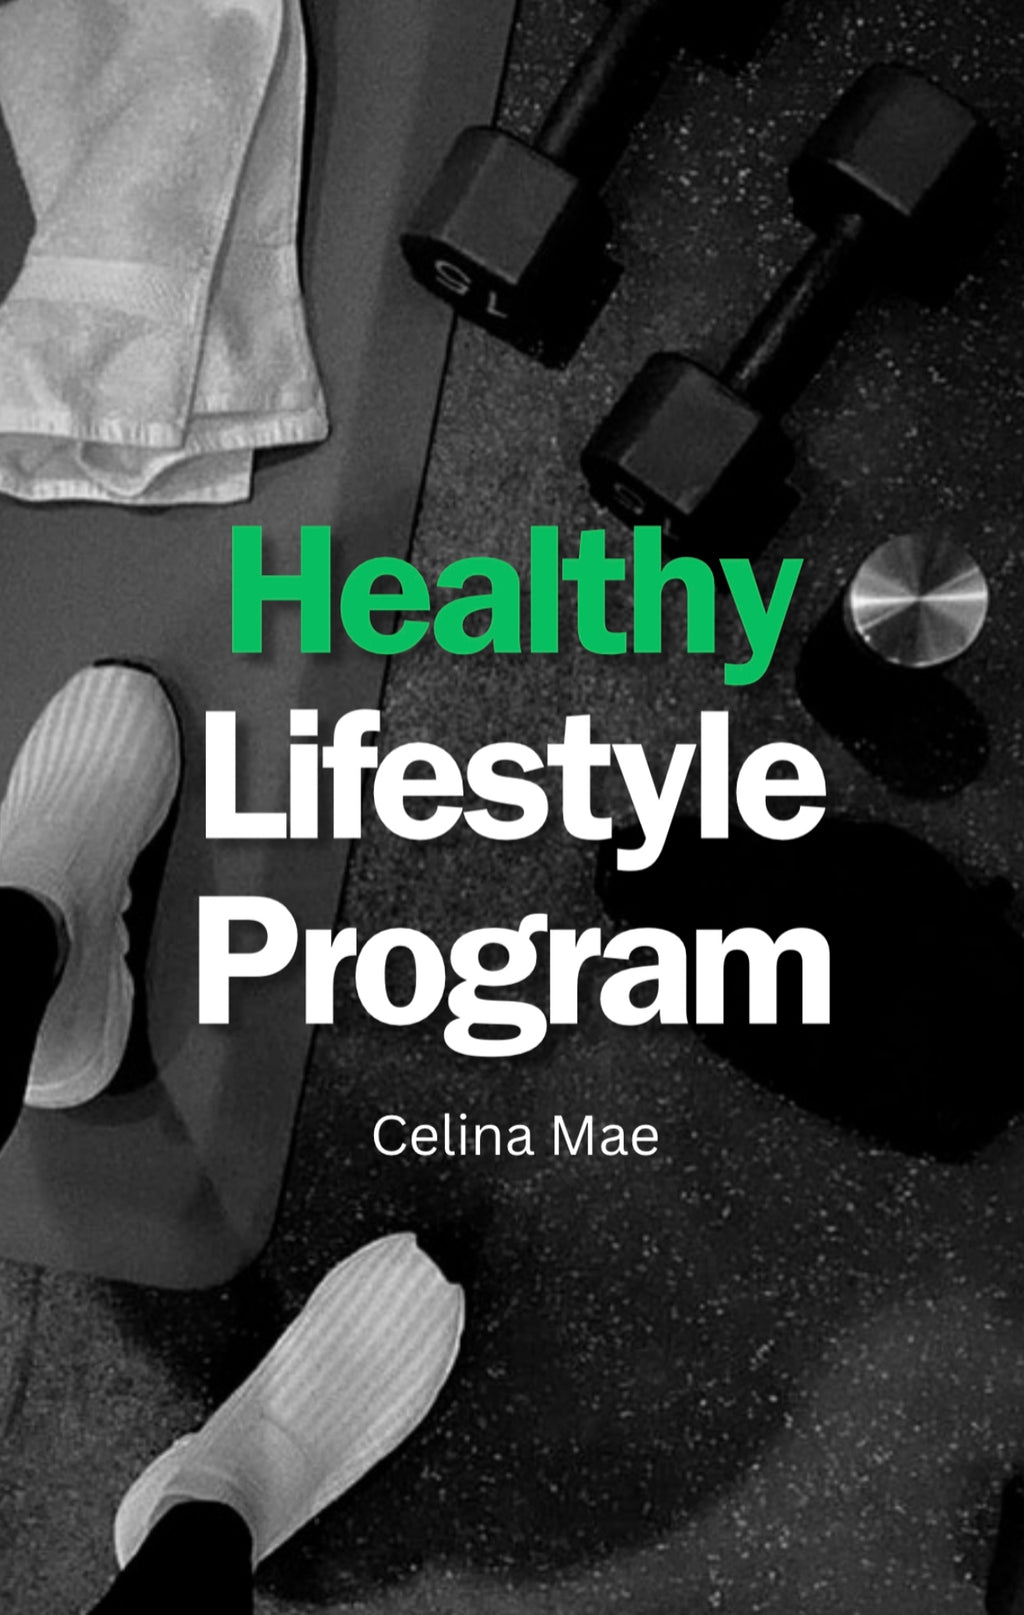 Healthy Lifestyle Program